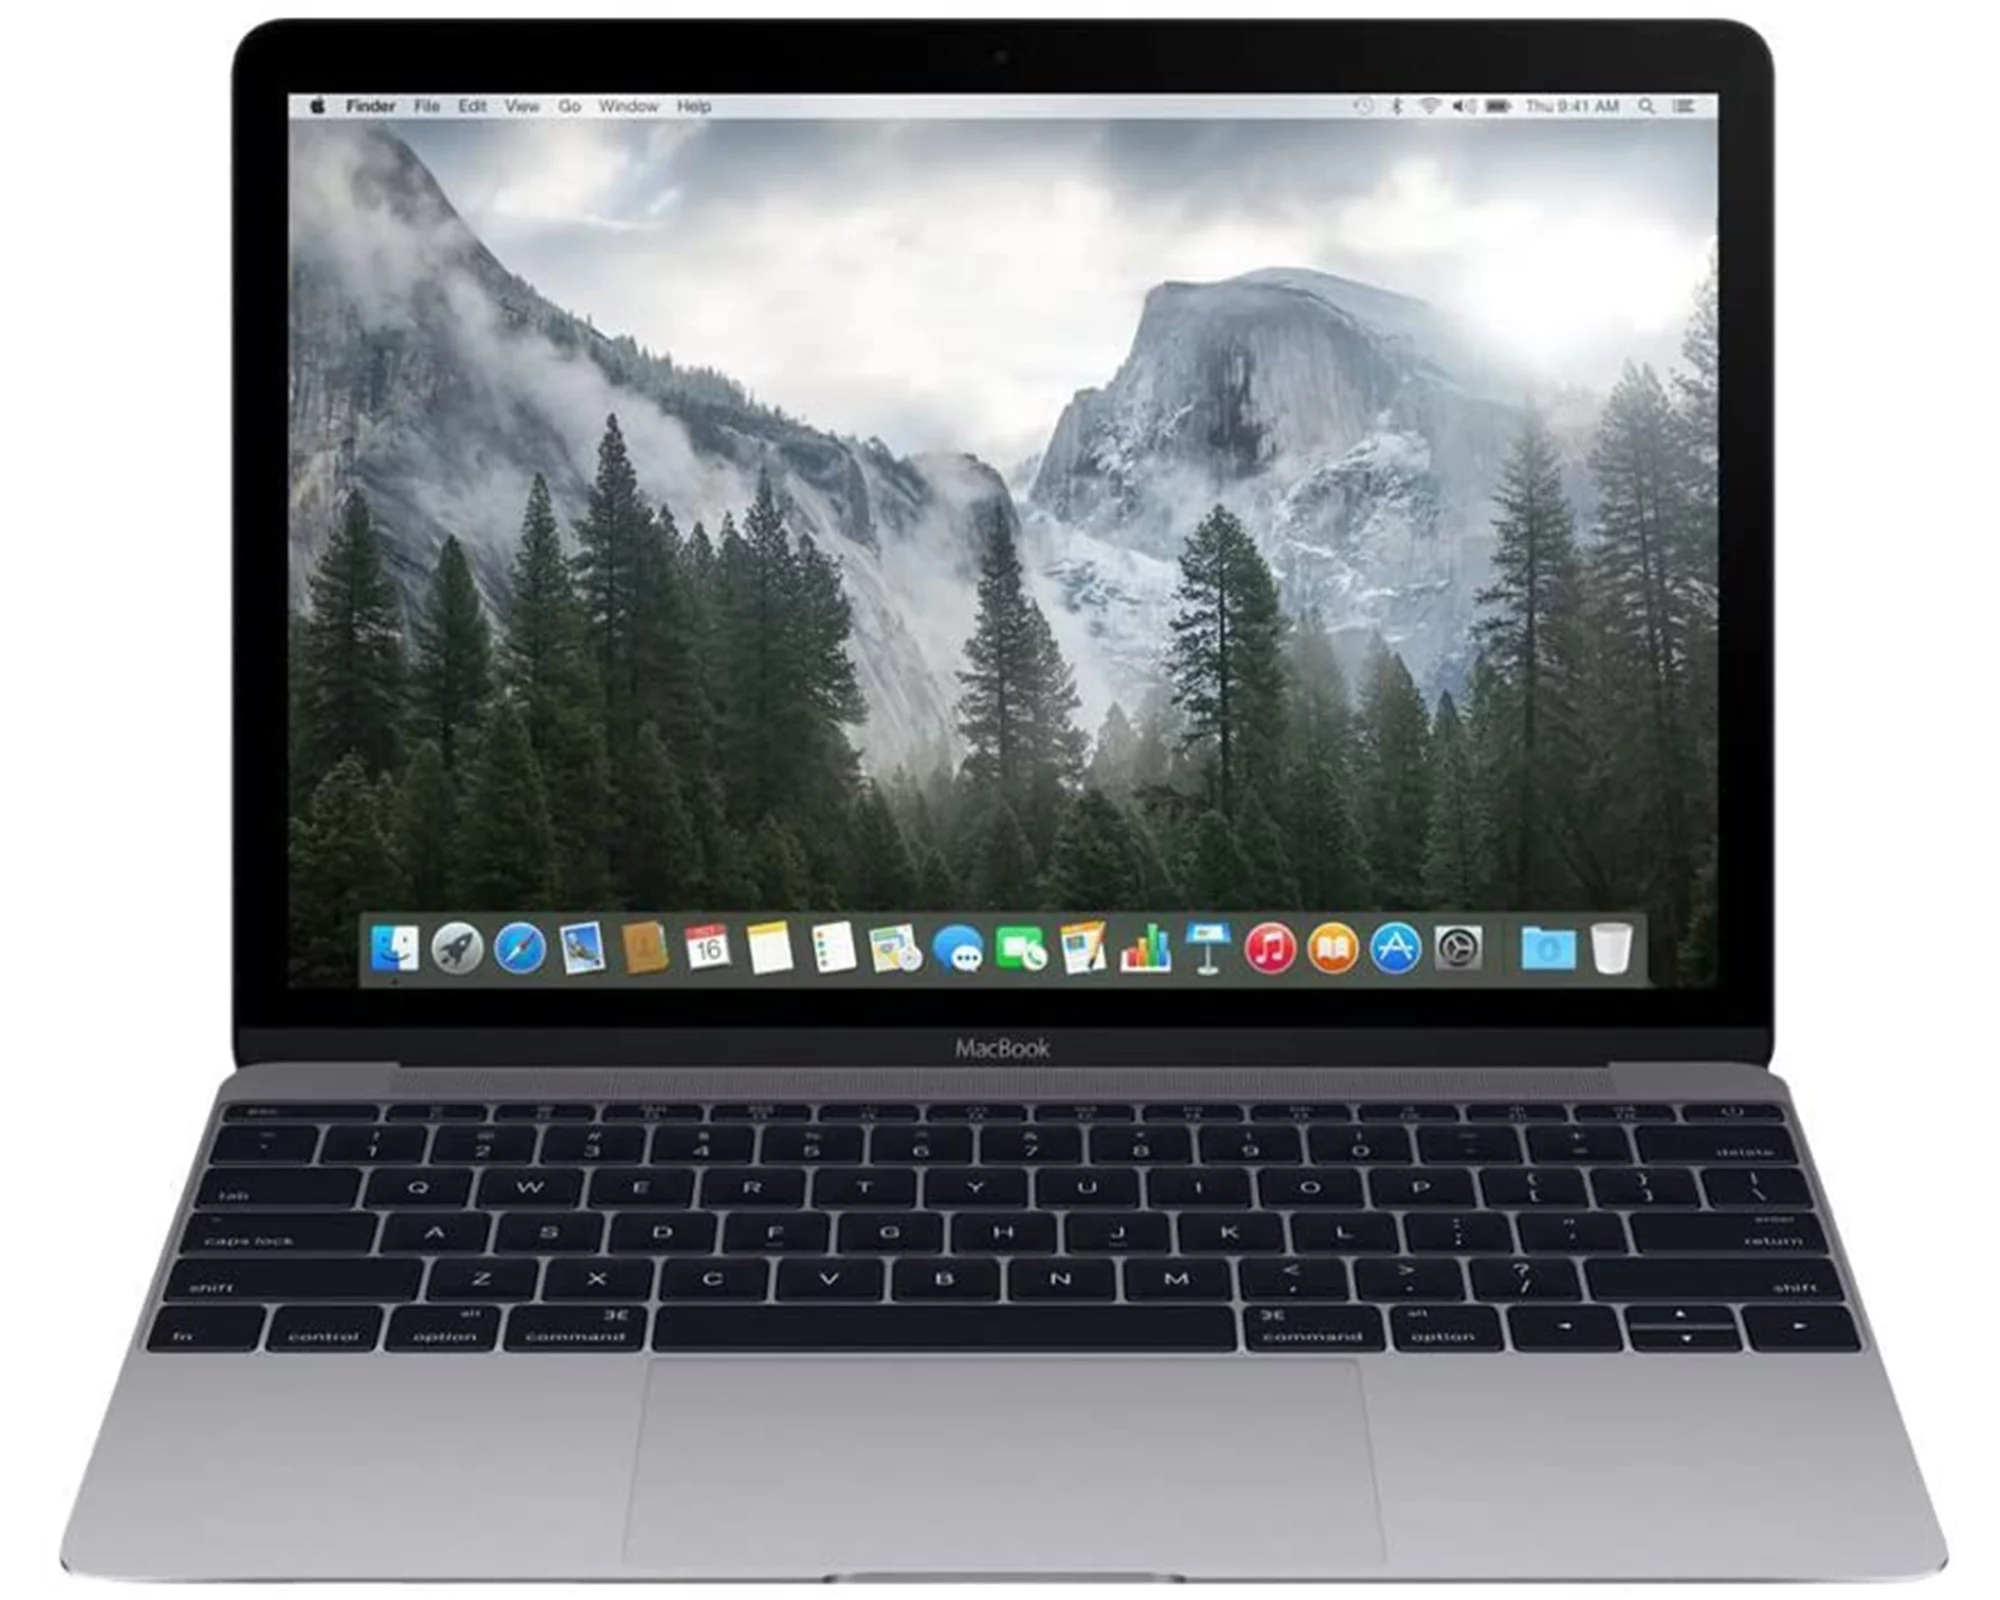 Restored Apple Macbook 12-inch Retina Display Intel Core m3 256GB - Space Gray (Early 2016) (Refurbished)